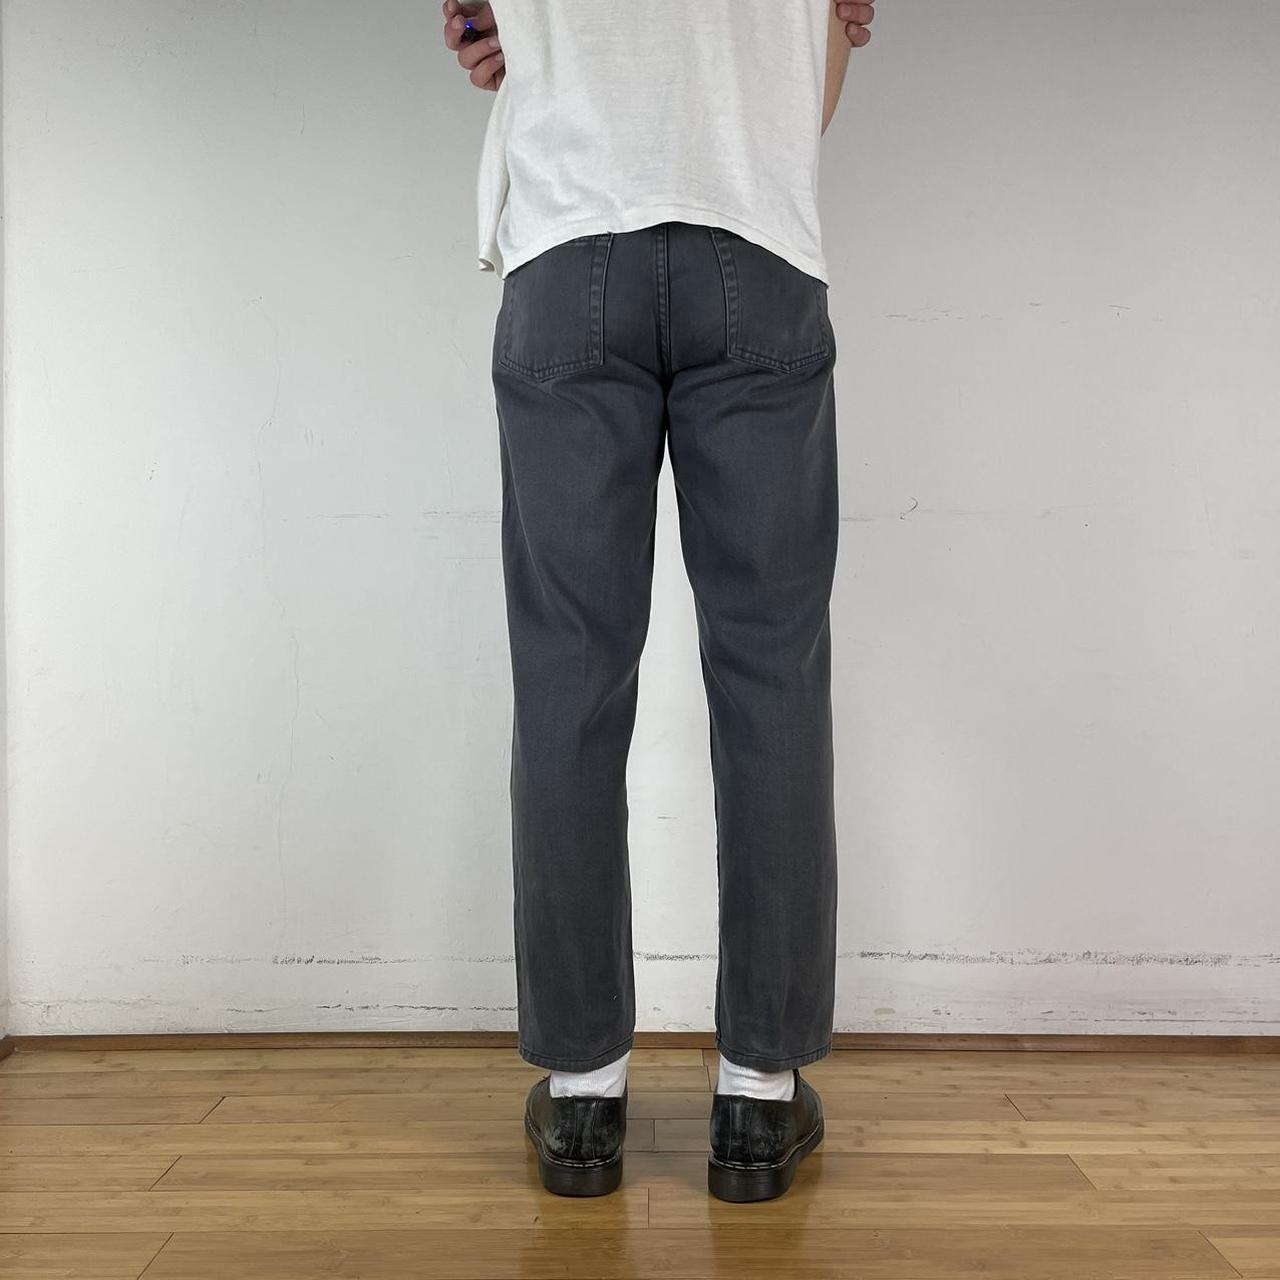 Calvin Klein Jeans Men's Grey and Black Jeans (3)